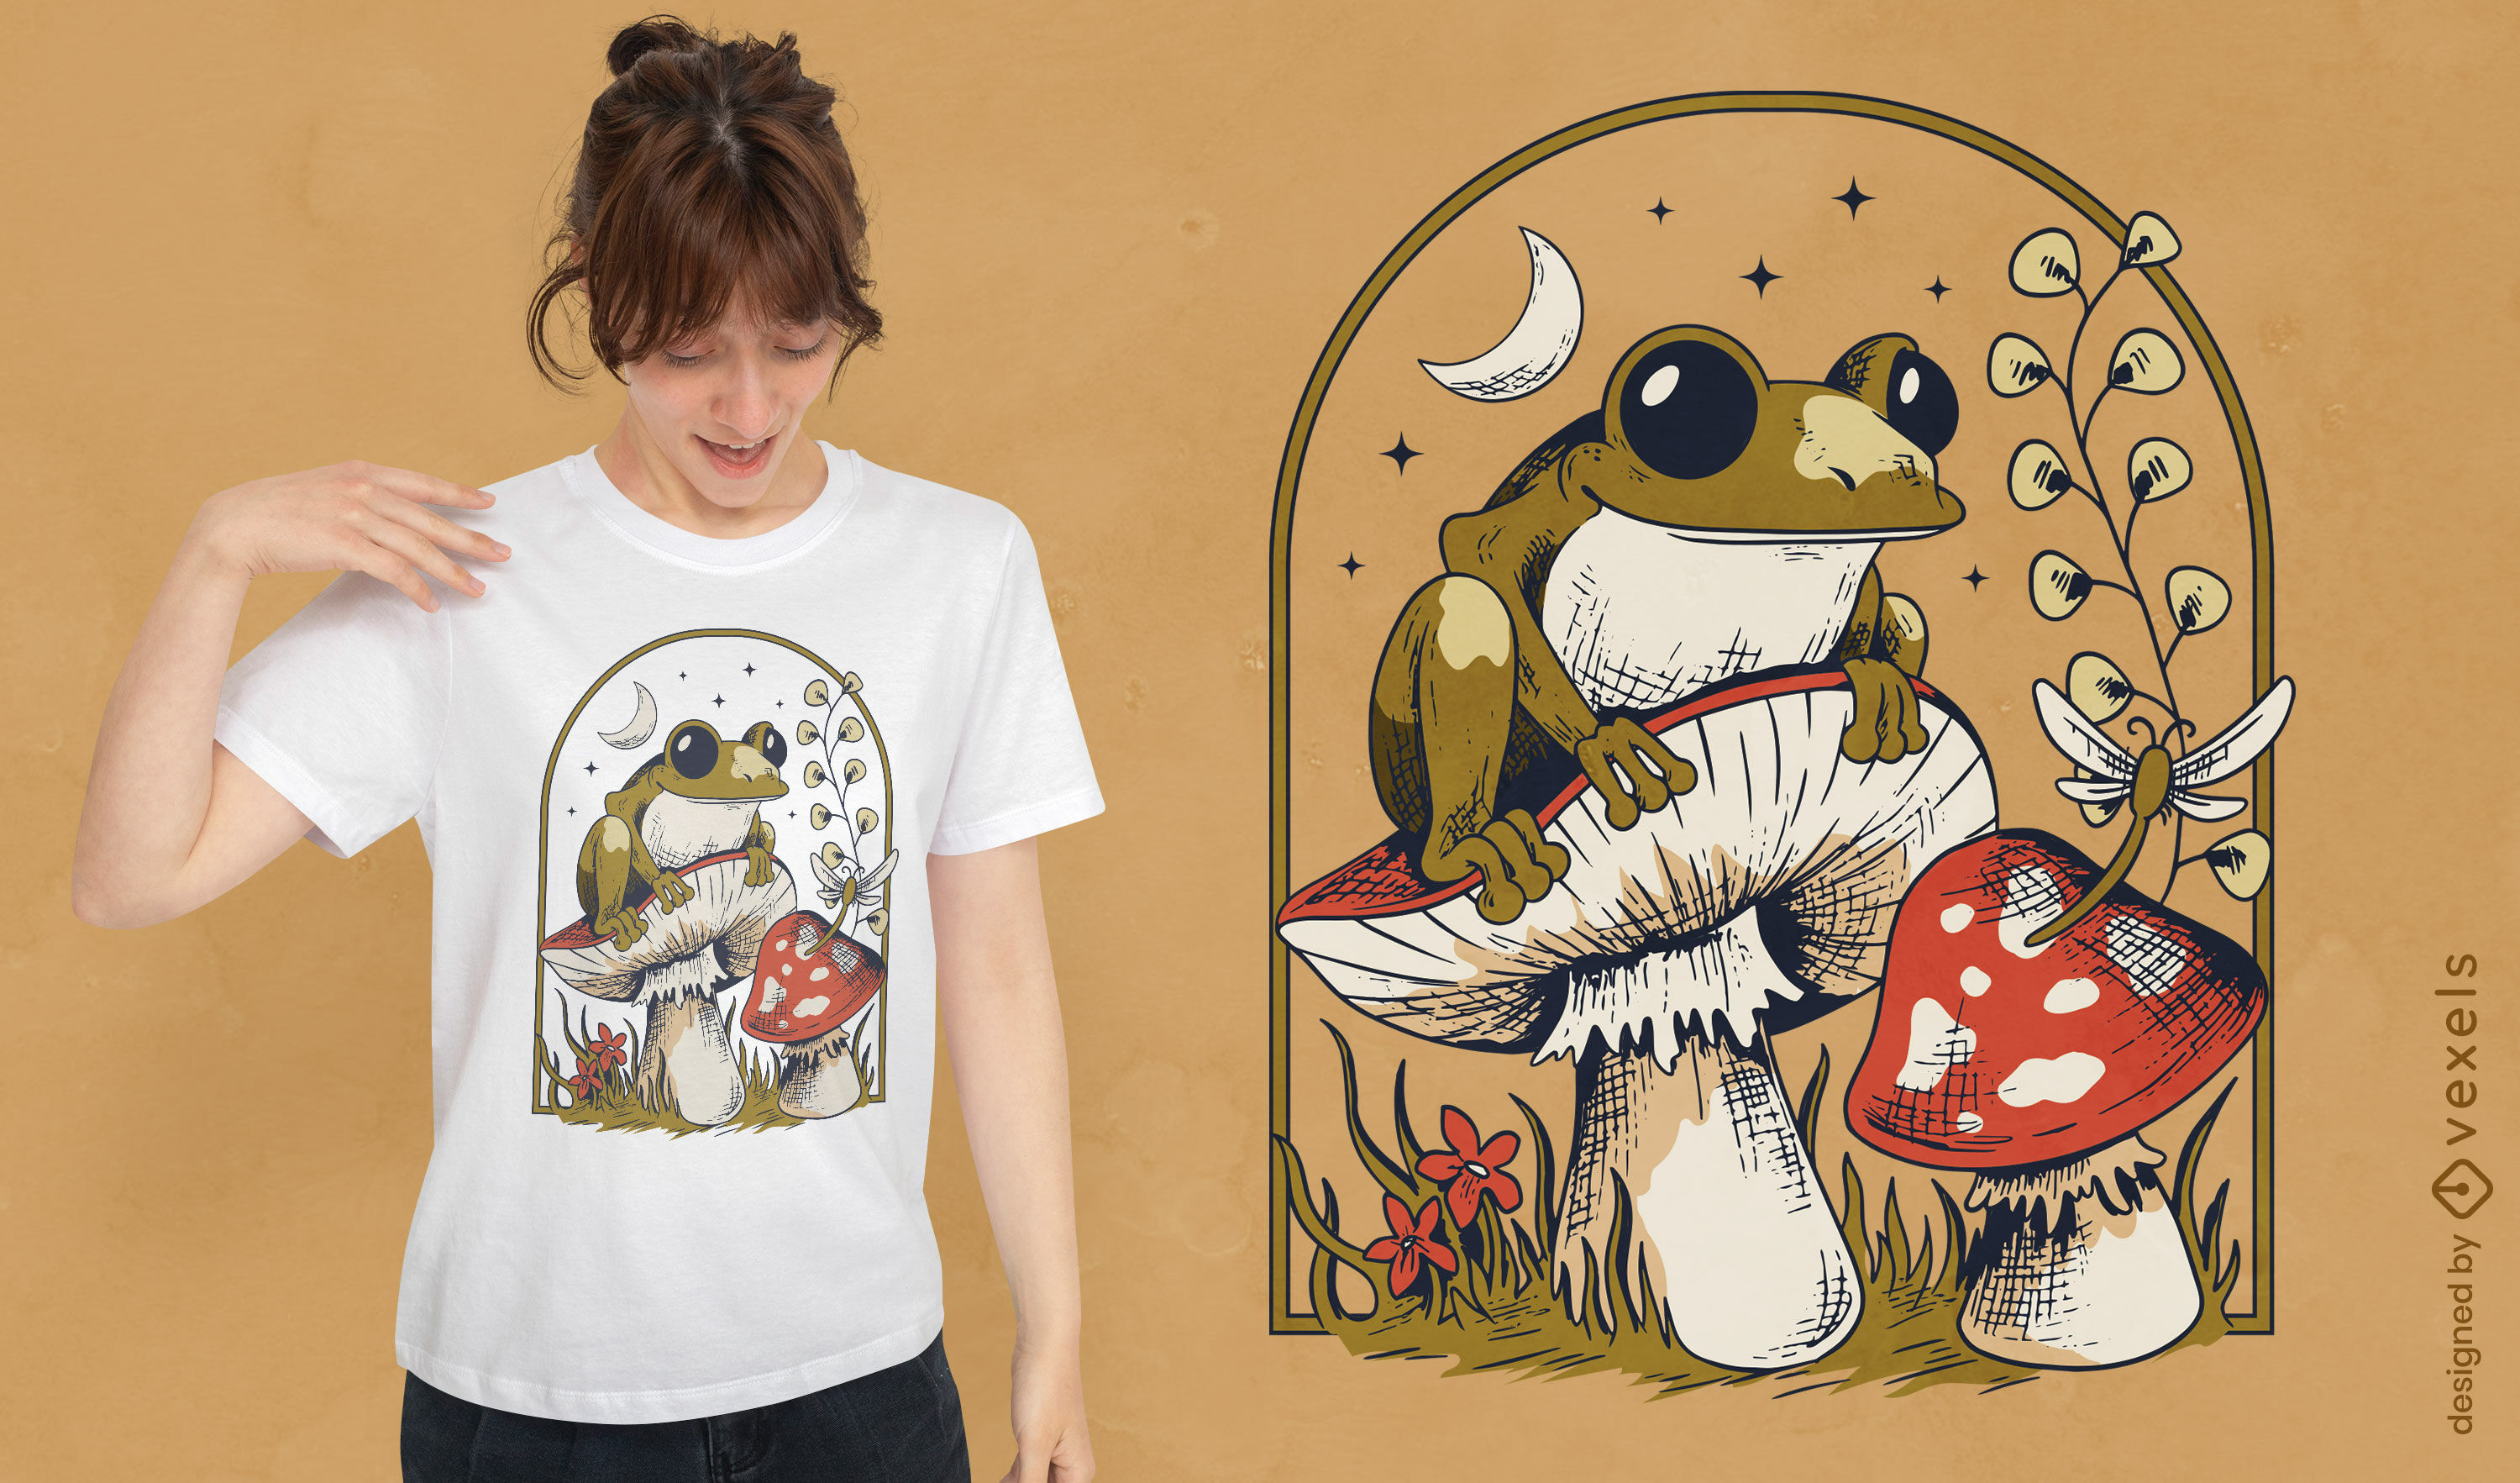 Frog and mushrooms cottagecore t-shirt design